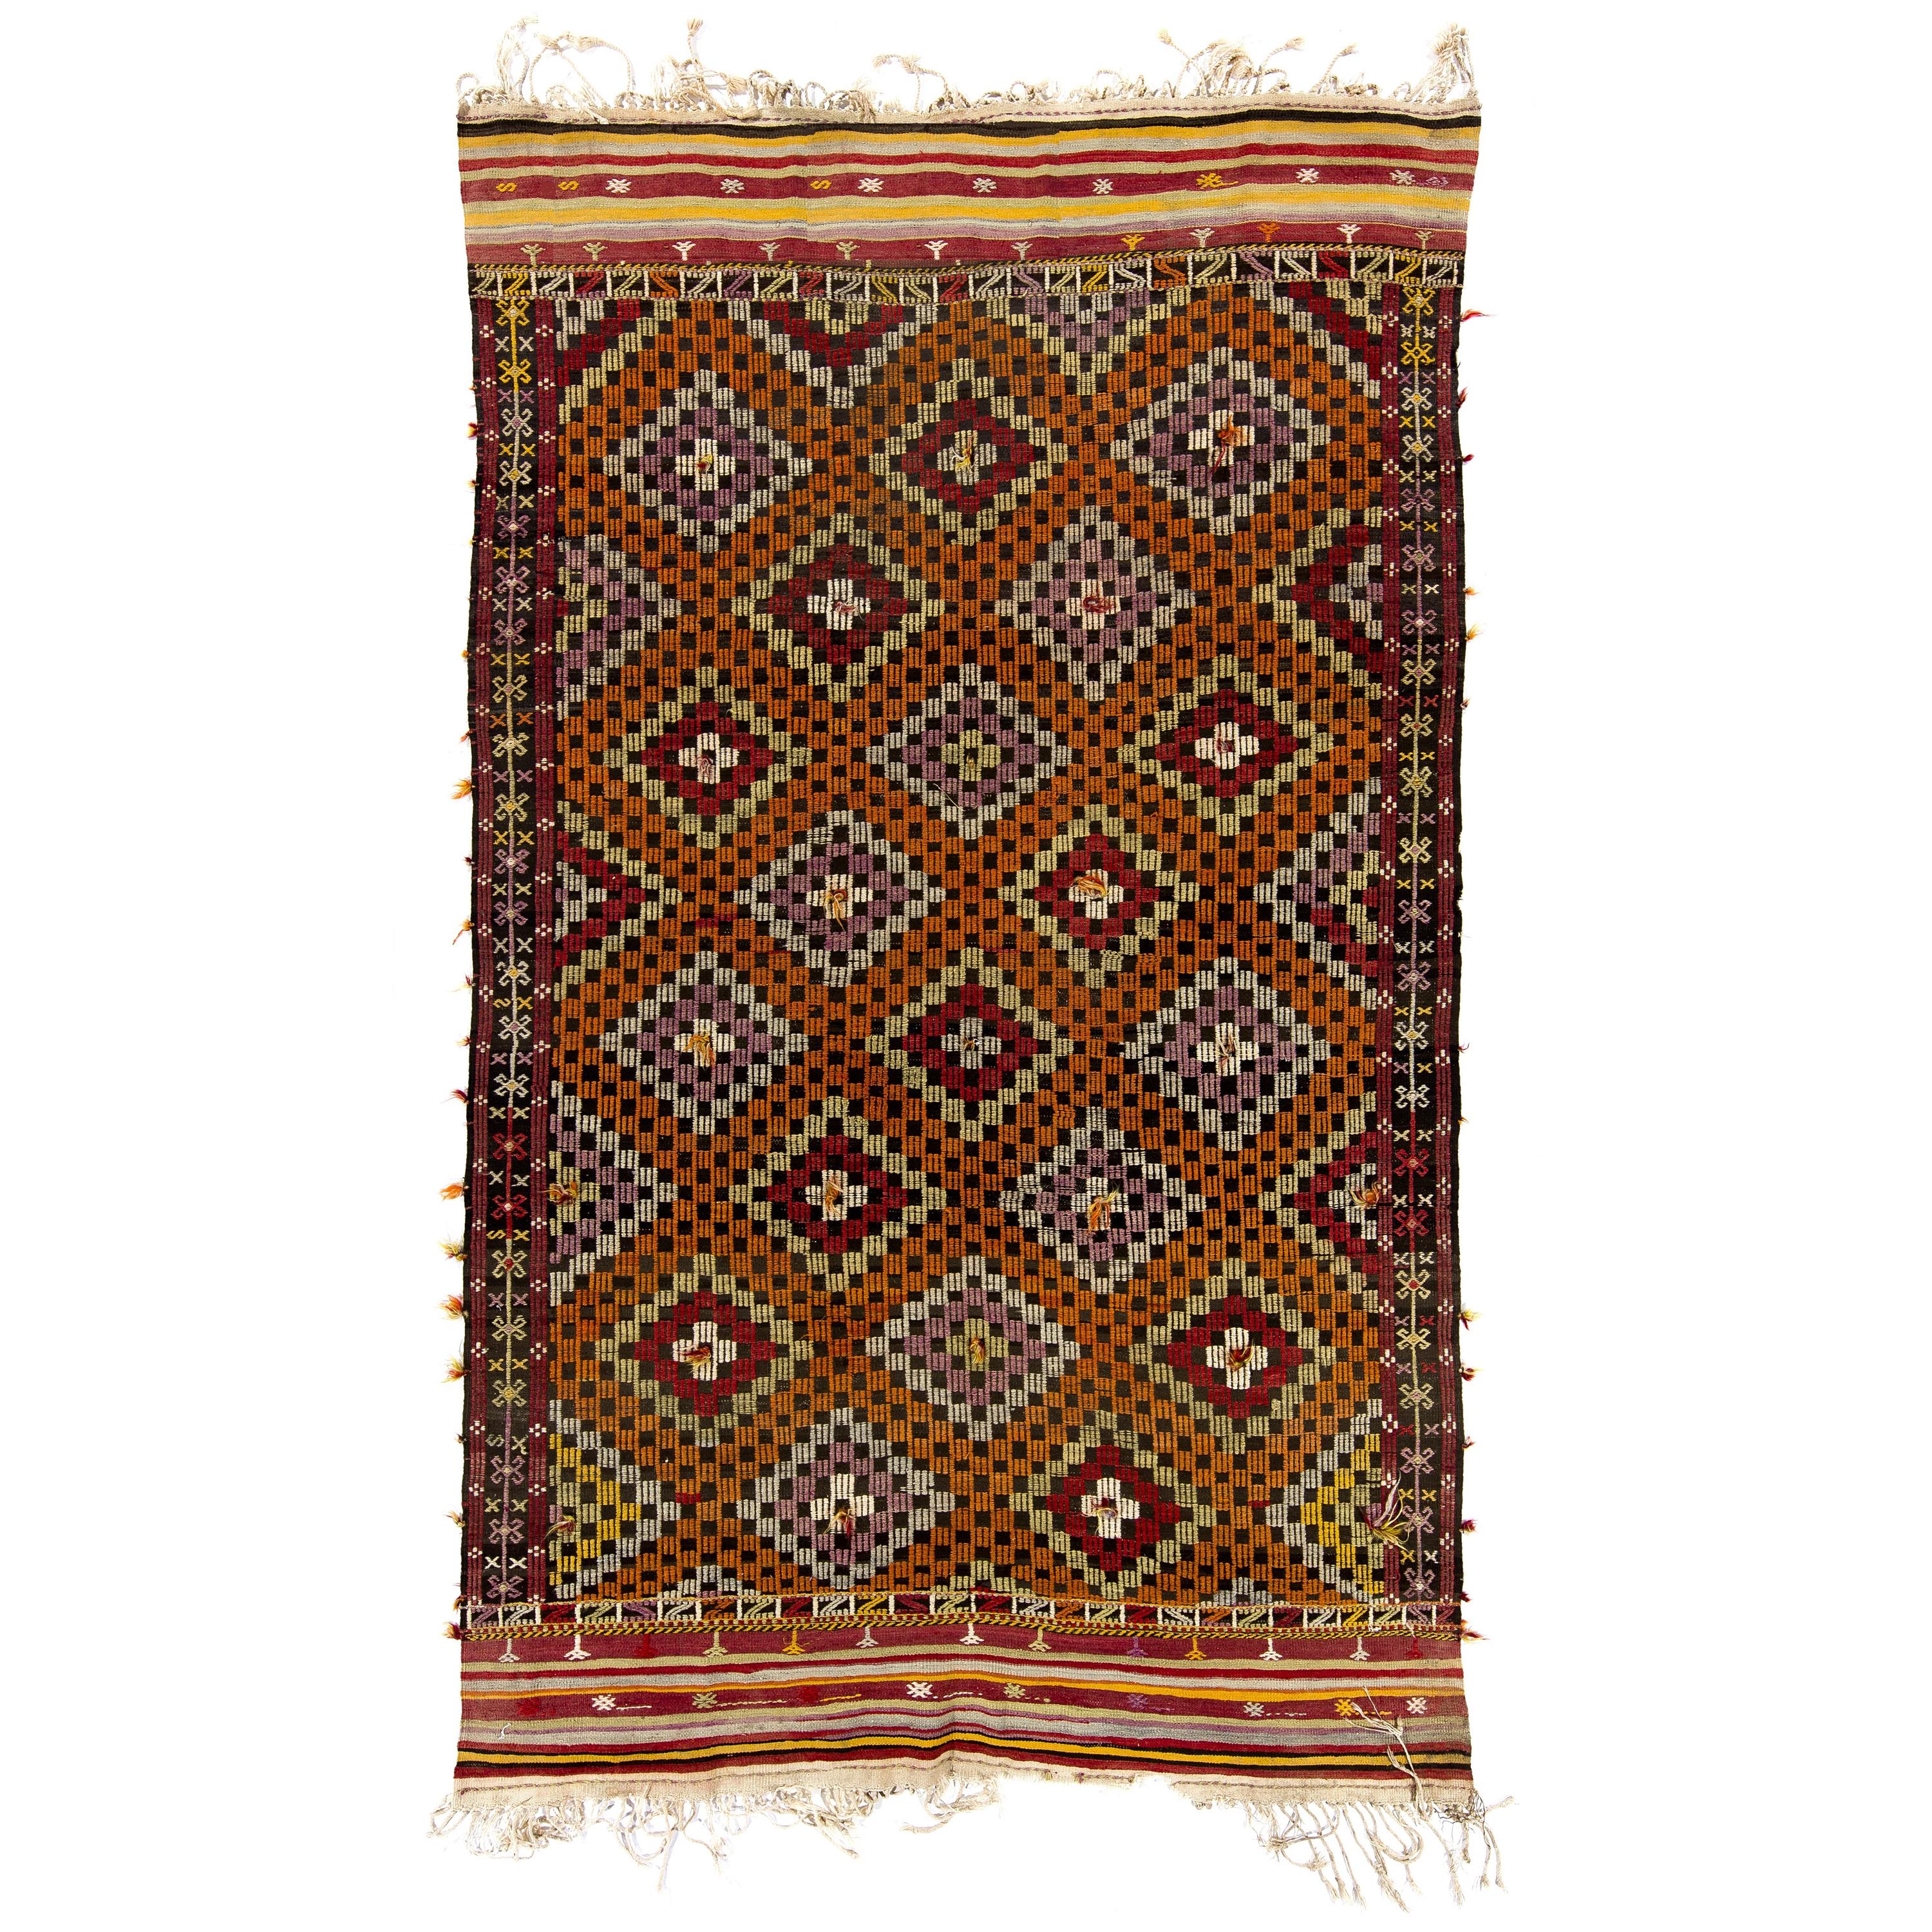 6.7x11 Ft Vintage Anatolian Jijim Kilim Rug, One of a Kind Hand-Woven Carpet